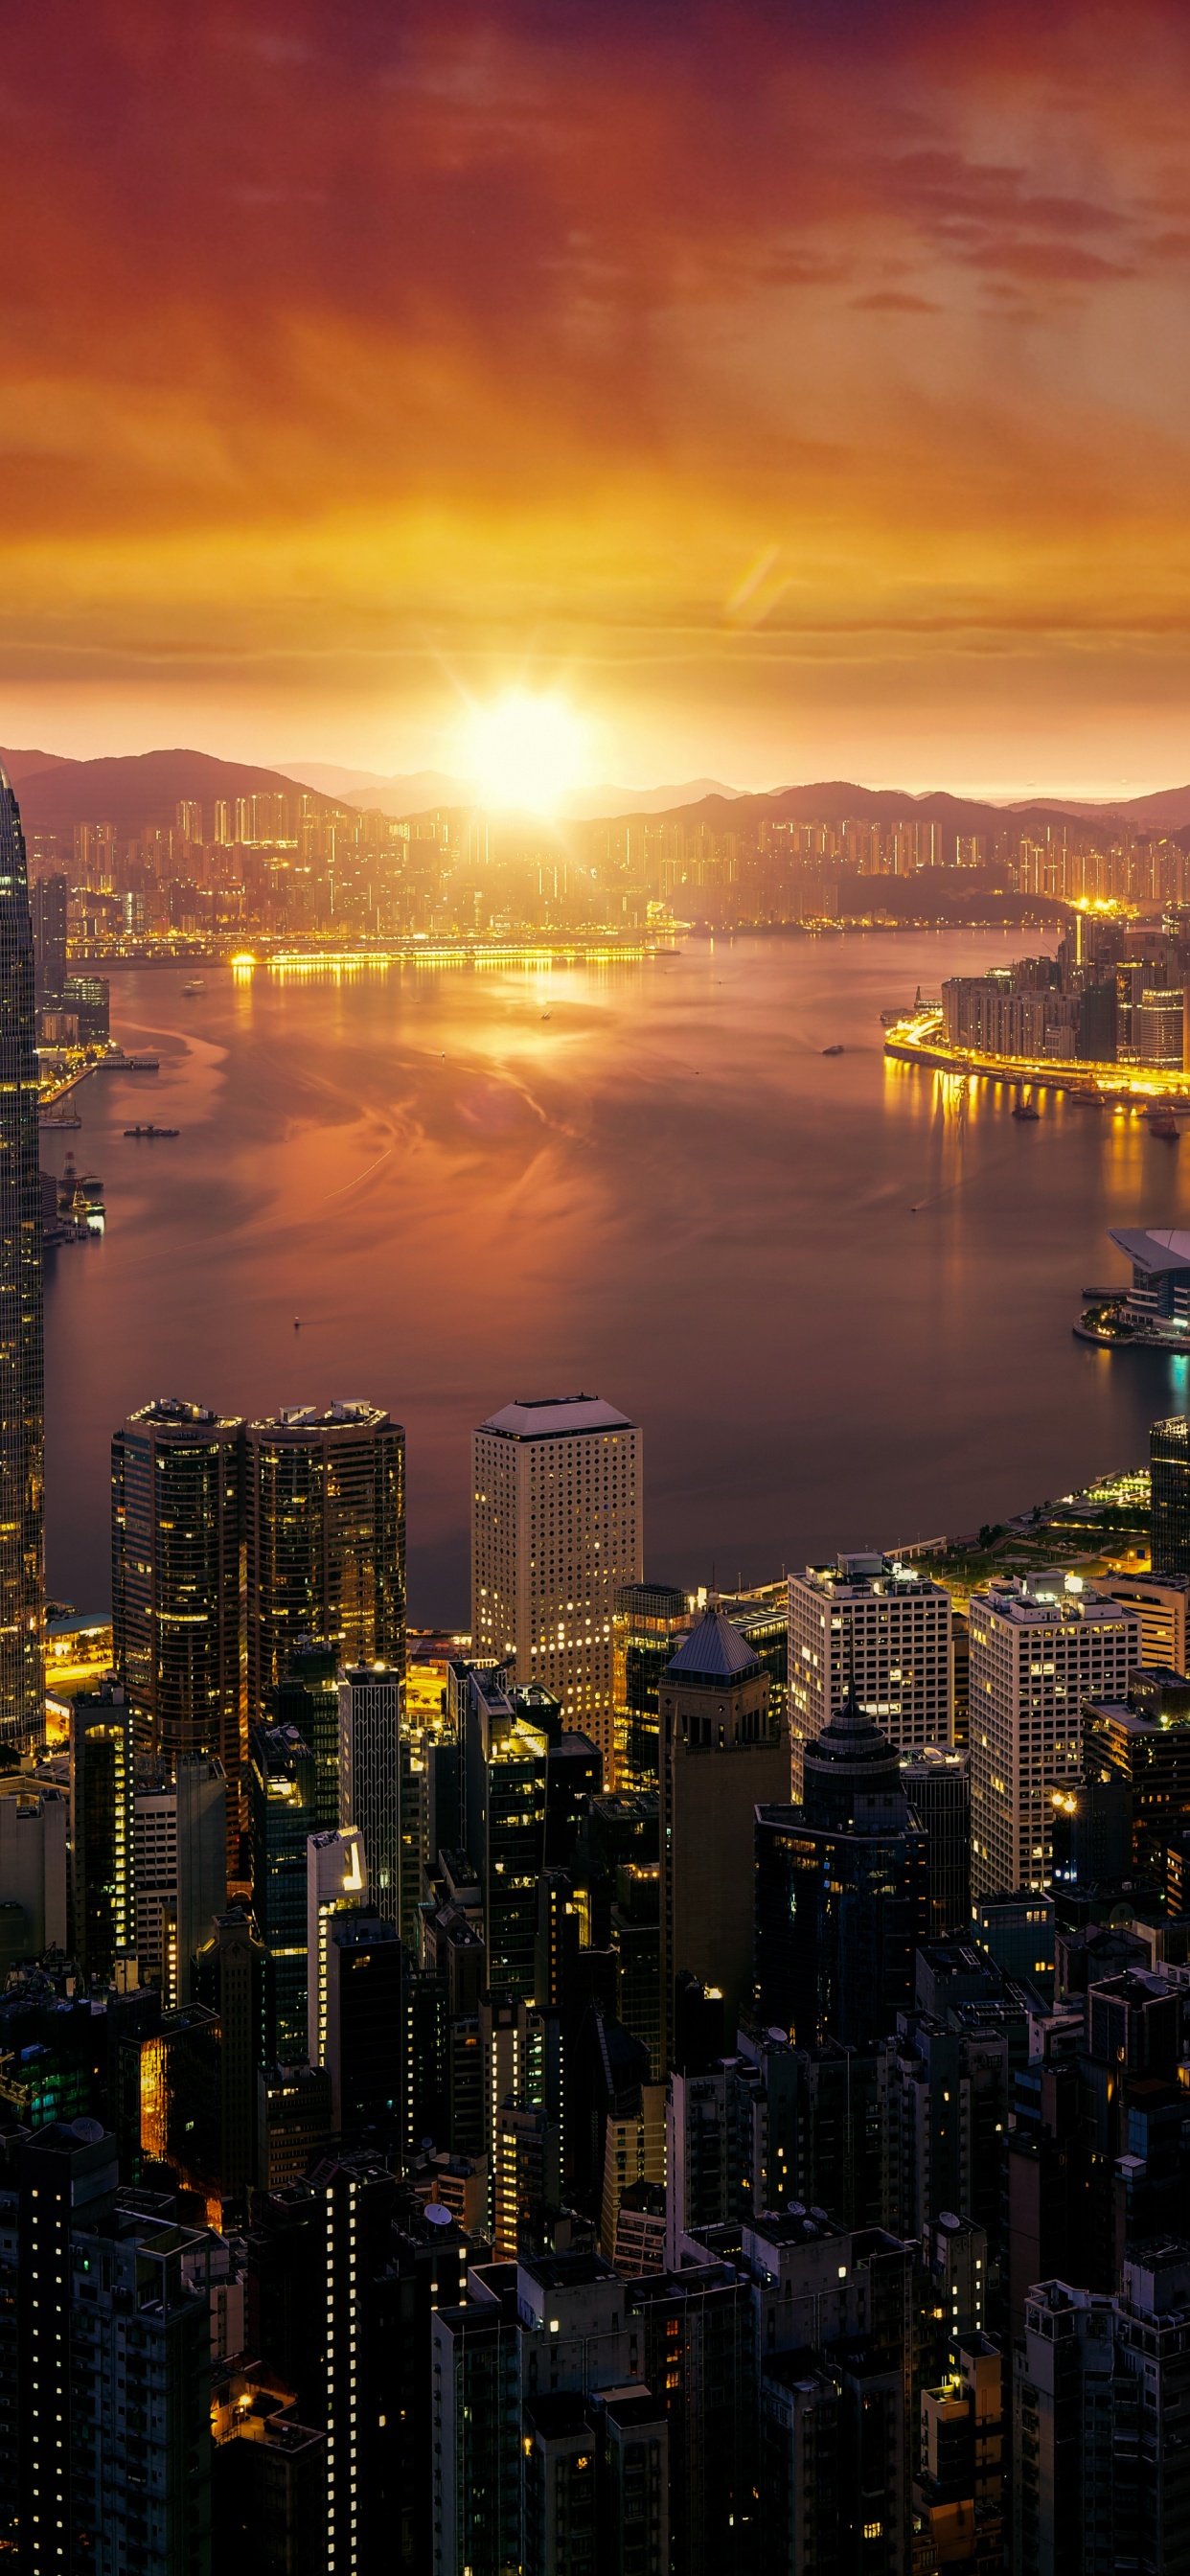 Hong Kong 4K Wallpaper, Cityscape, Sunrise, City lights